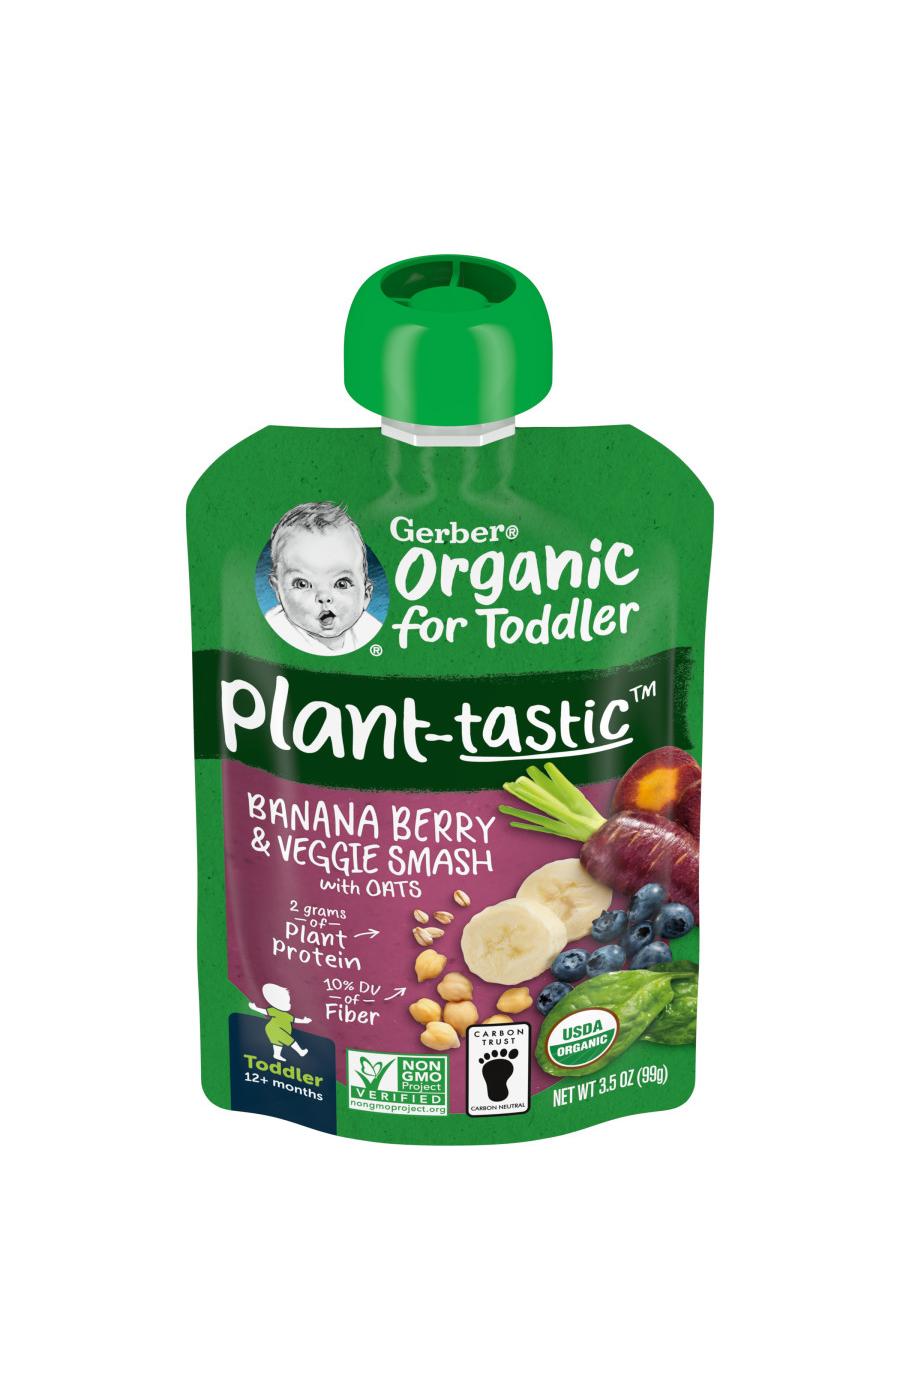 Gerber Organic for Toddler Plant-tastic Pouch - Banana Berry & Veggie Smash; image 1 of 8